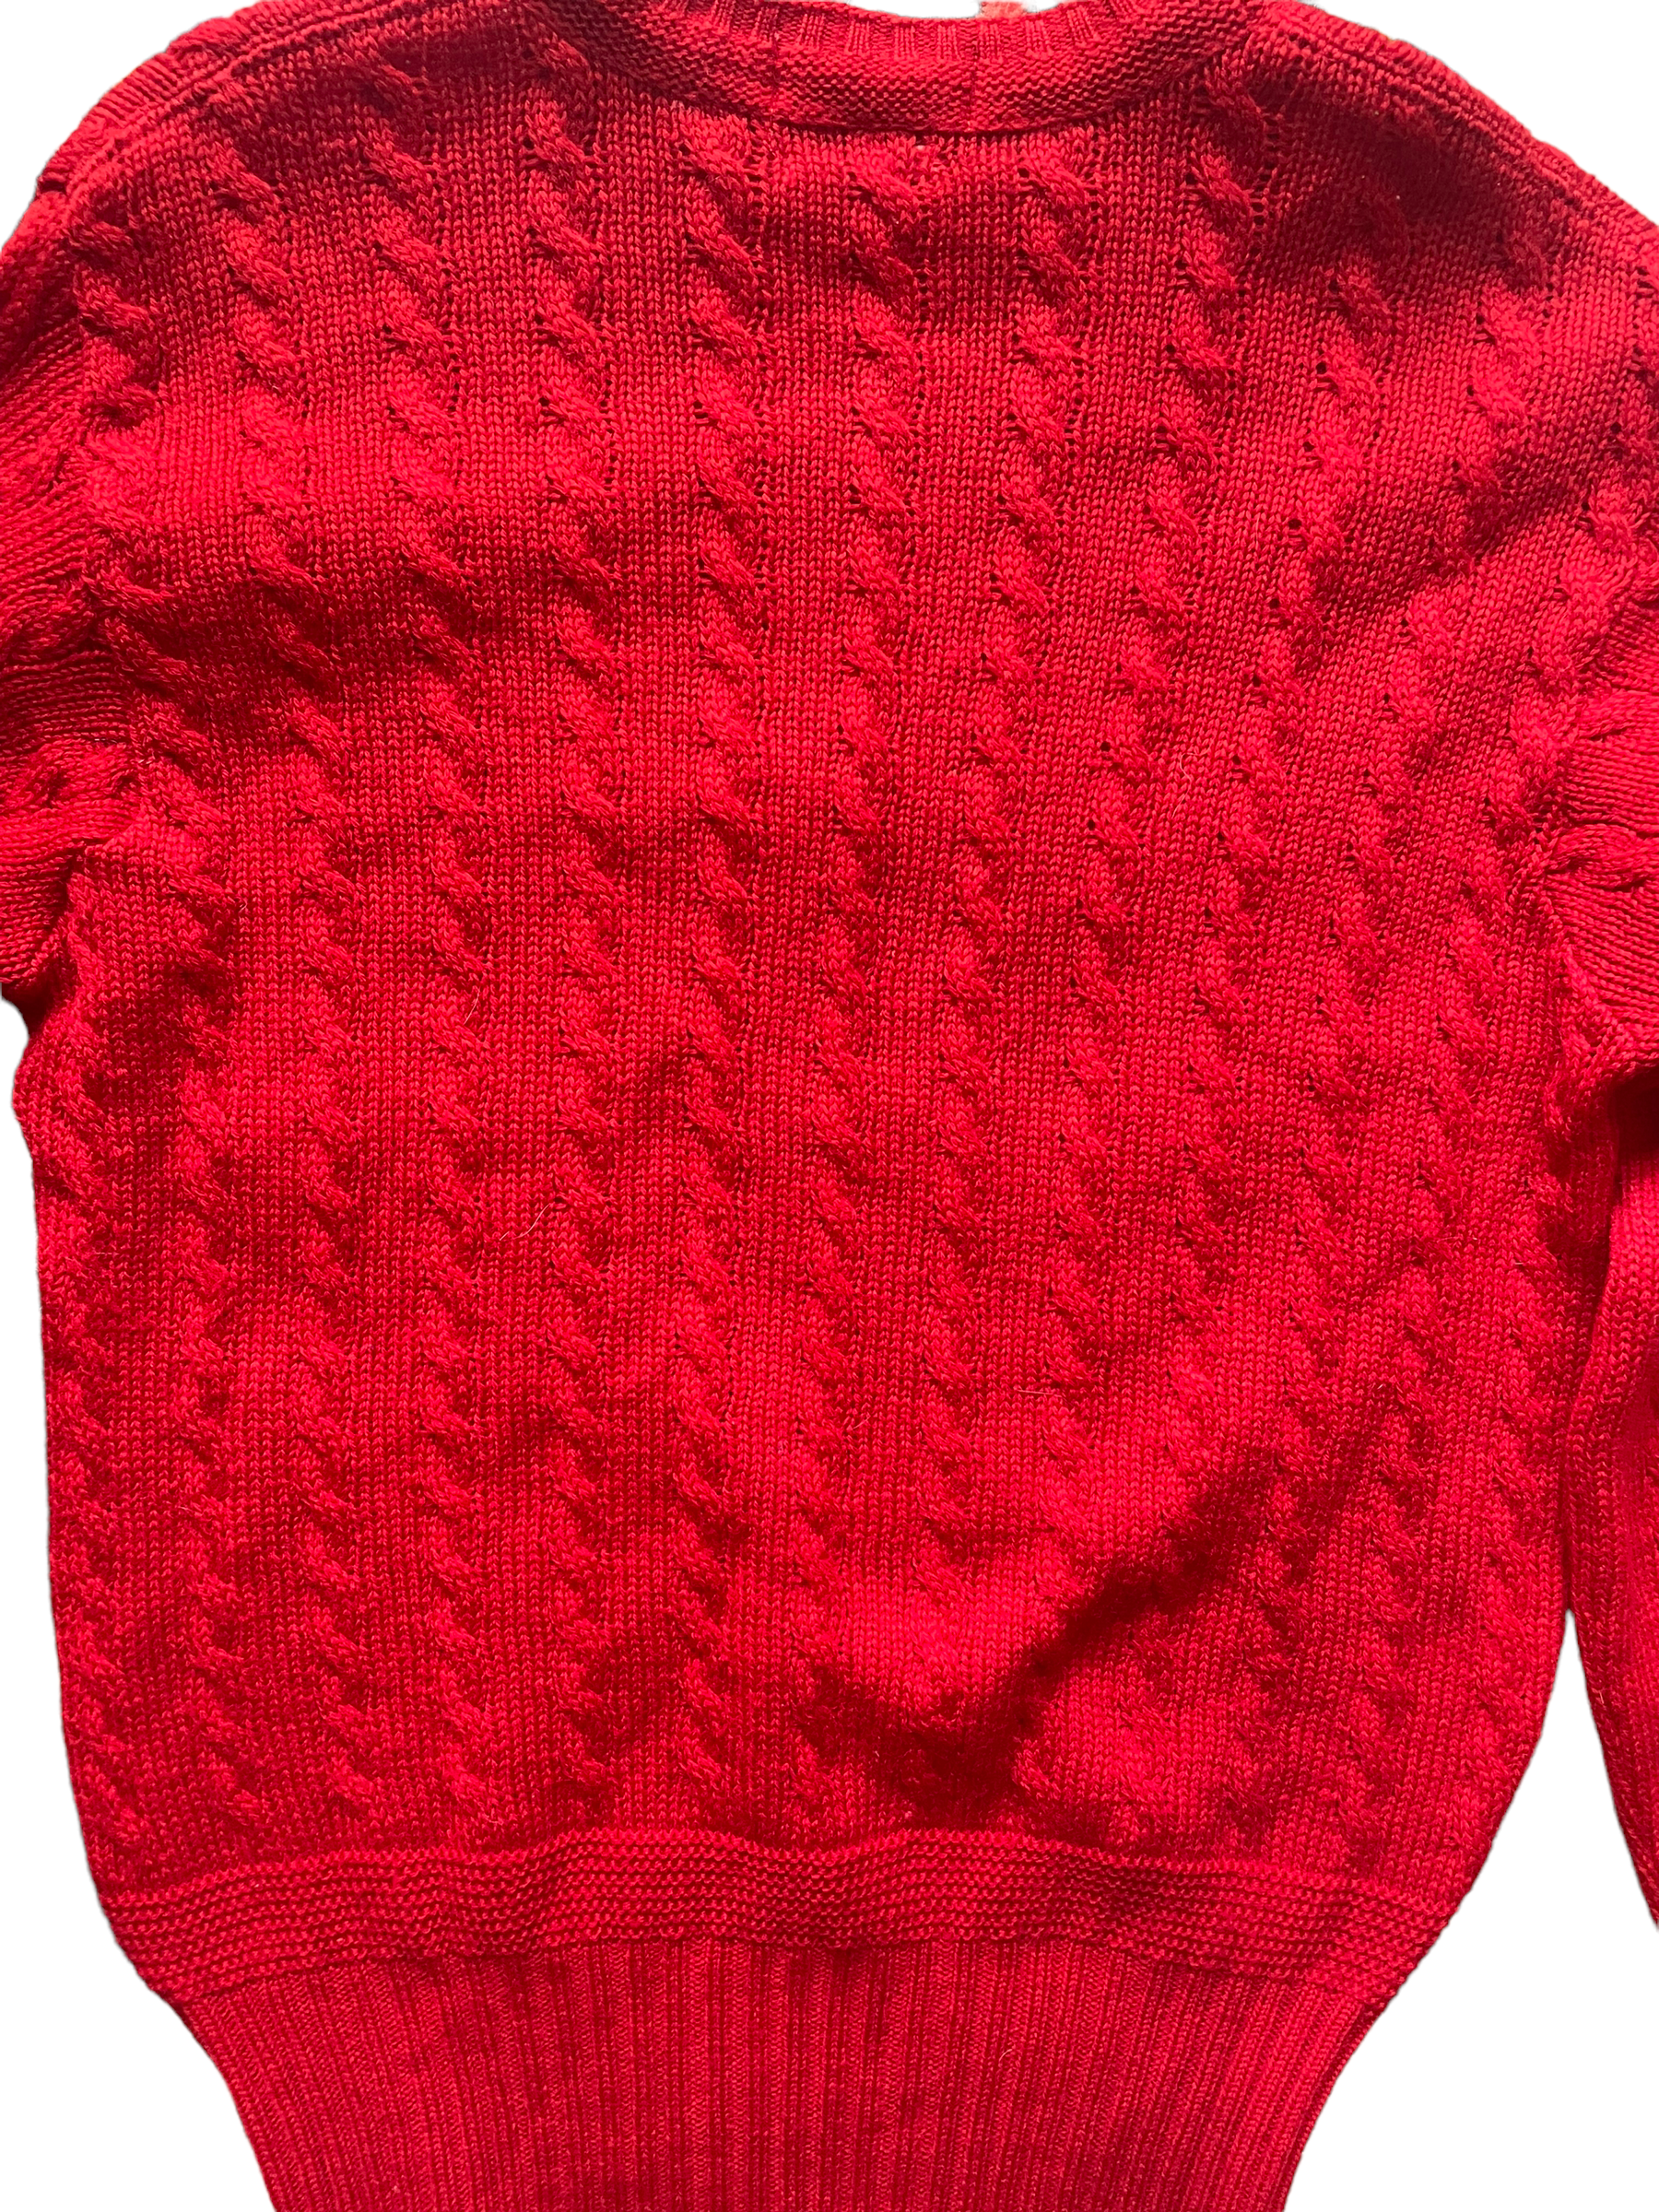 Vintage 1950s Jantzen Cable Knit Wool Sweater | Barn Owl Seattle | Seattle Vintage Sweaters Full back view.